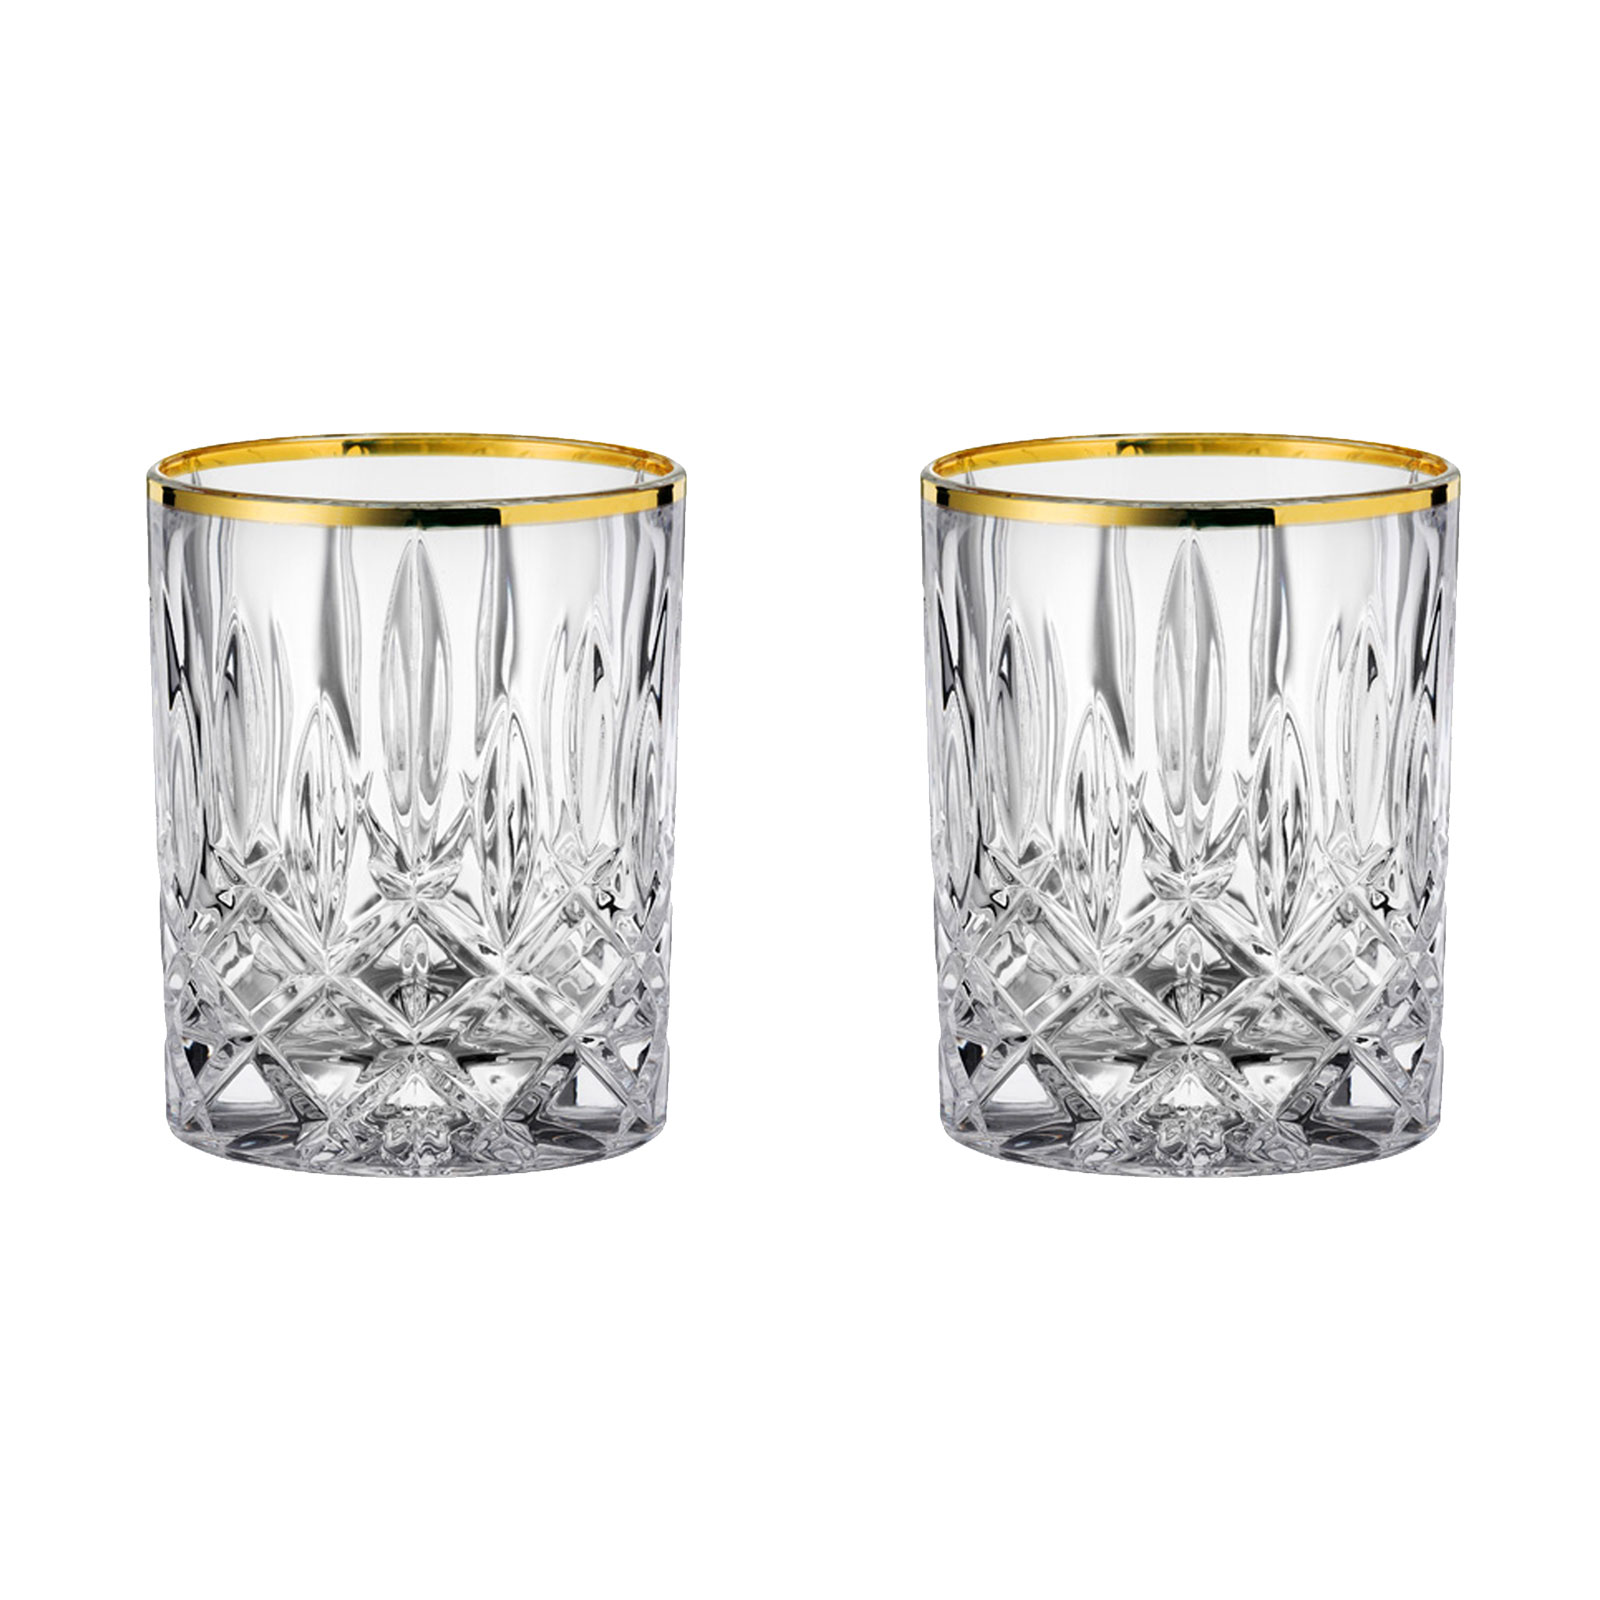 Nachtmann, 2-teiliges Whiskybecher Set, Whiskyglas mit Goldrand, Kristallglas, 295 ml, Noblesse Gold Edition, 104025